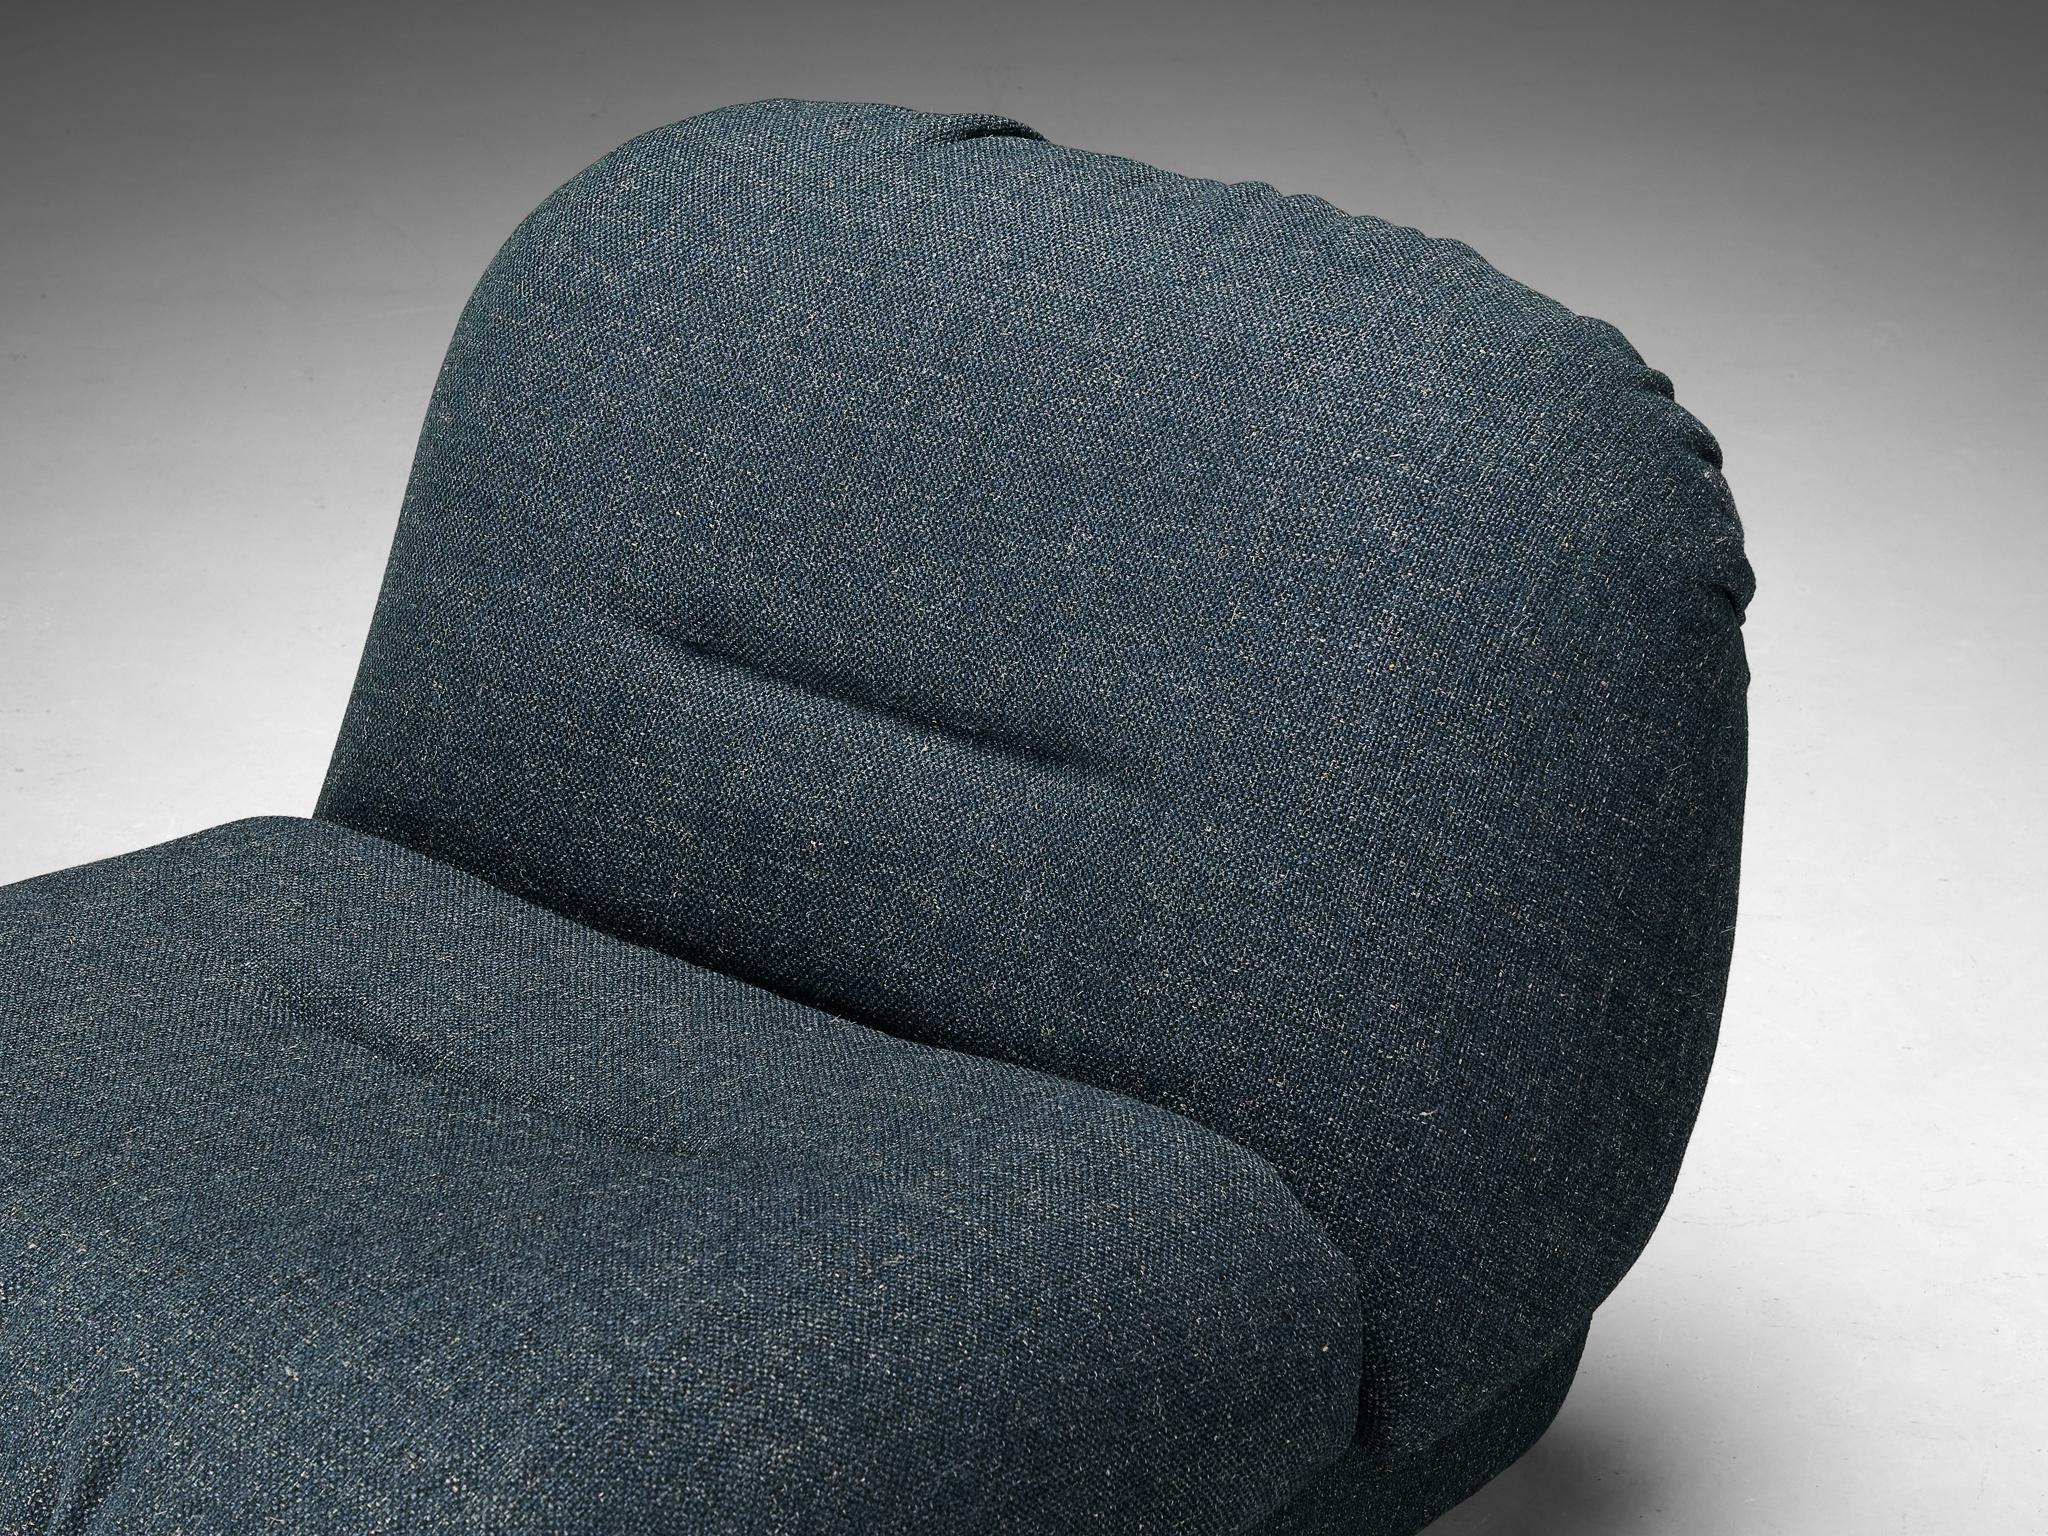 Alberto Rosselli for Saporiti 'Maxijumbo' Lounge Chairs  1